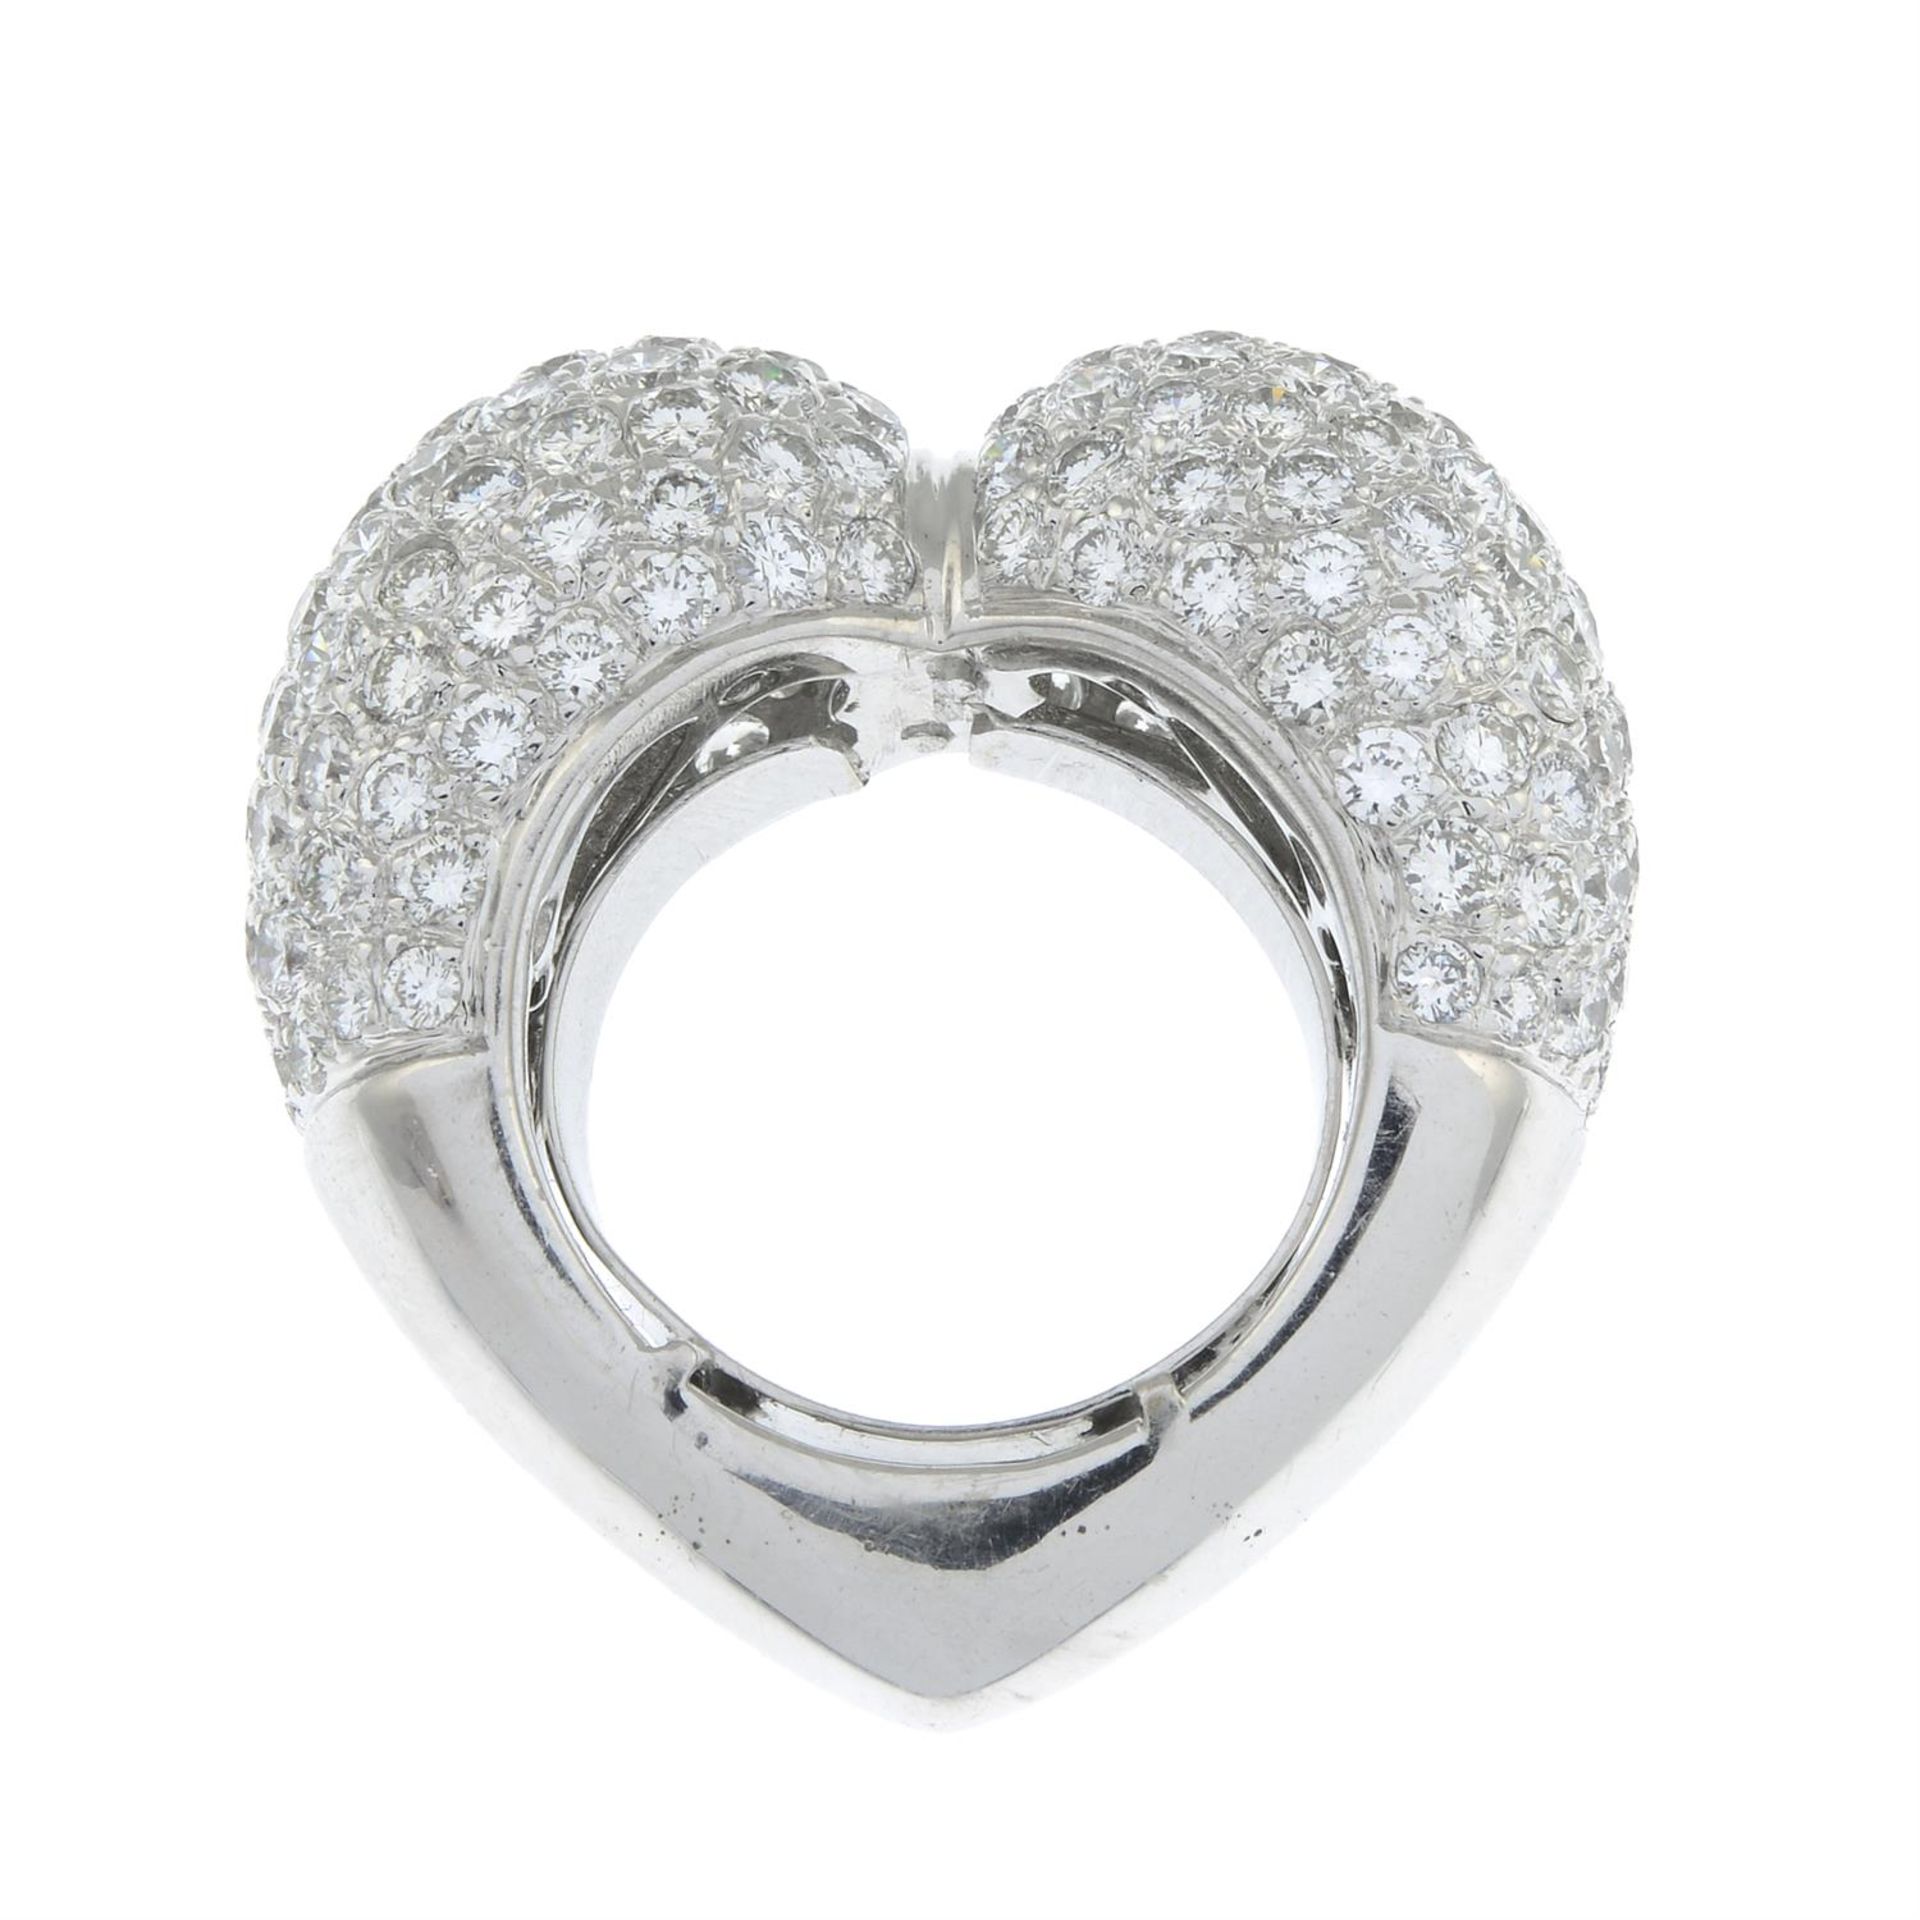 A pavé-set diamond heart ring. - Image 2 of 6